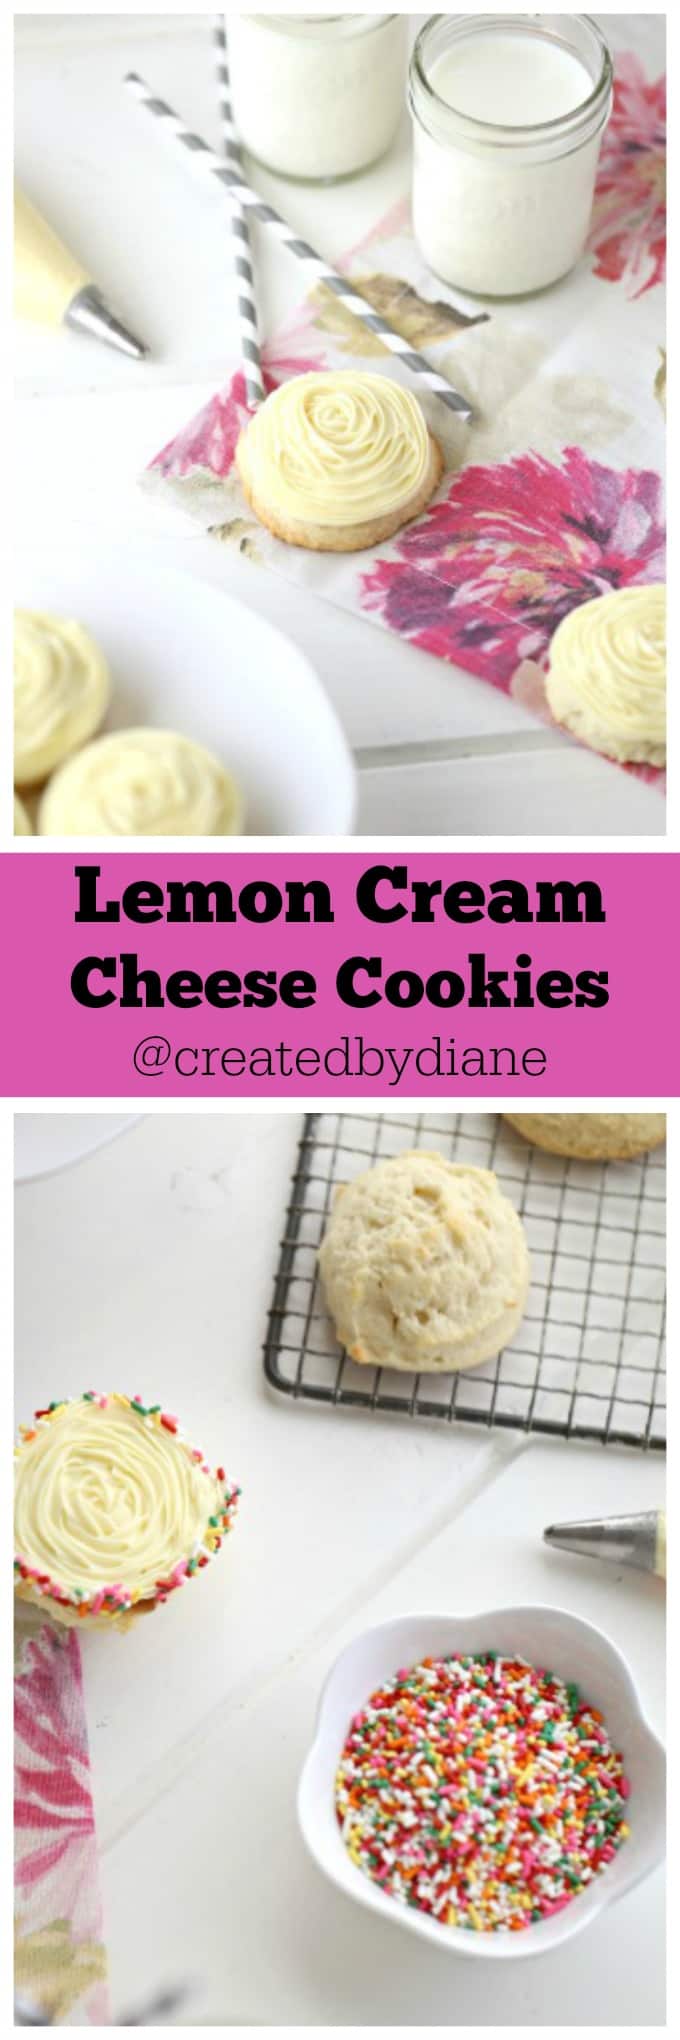 Lemon Cream Cheese Cookies @createdbydiane